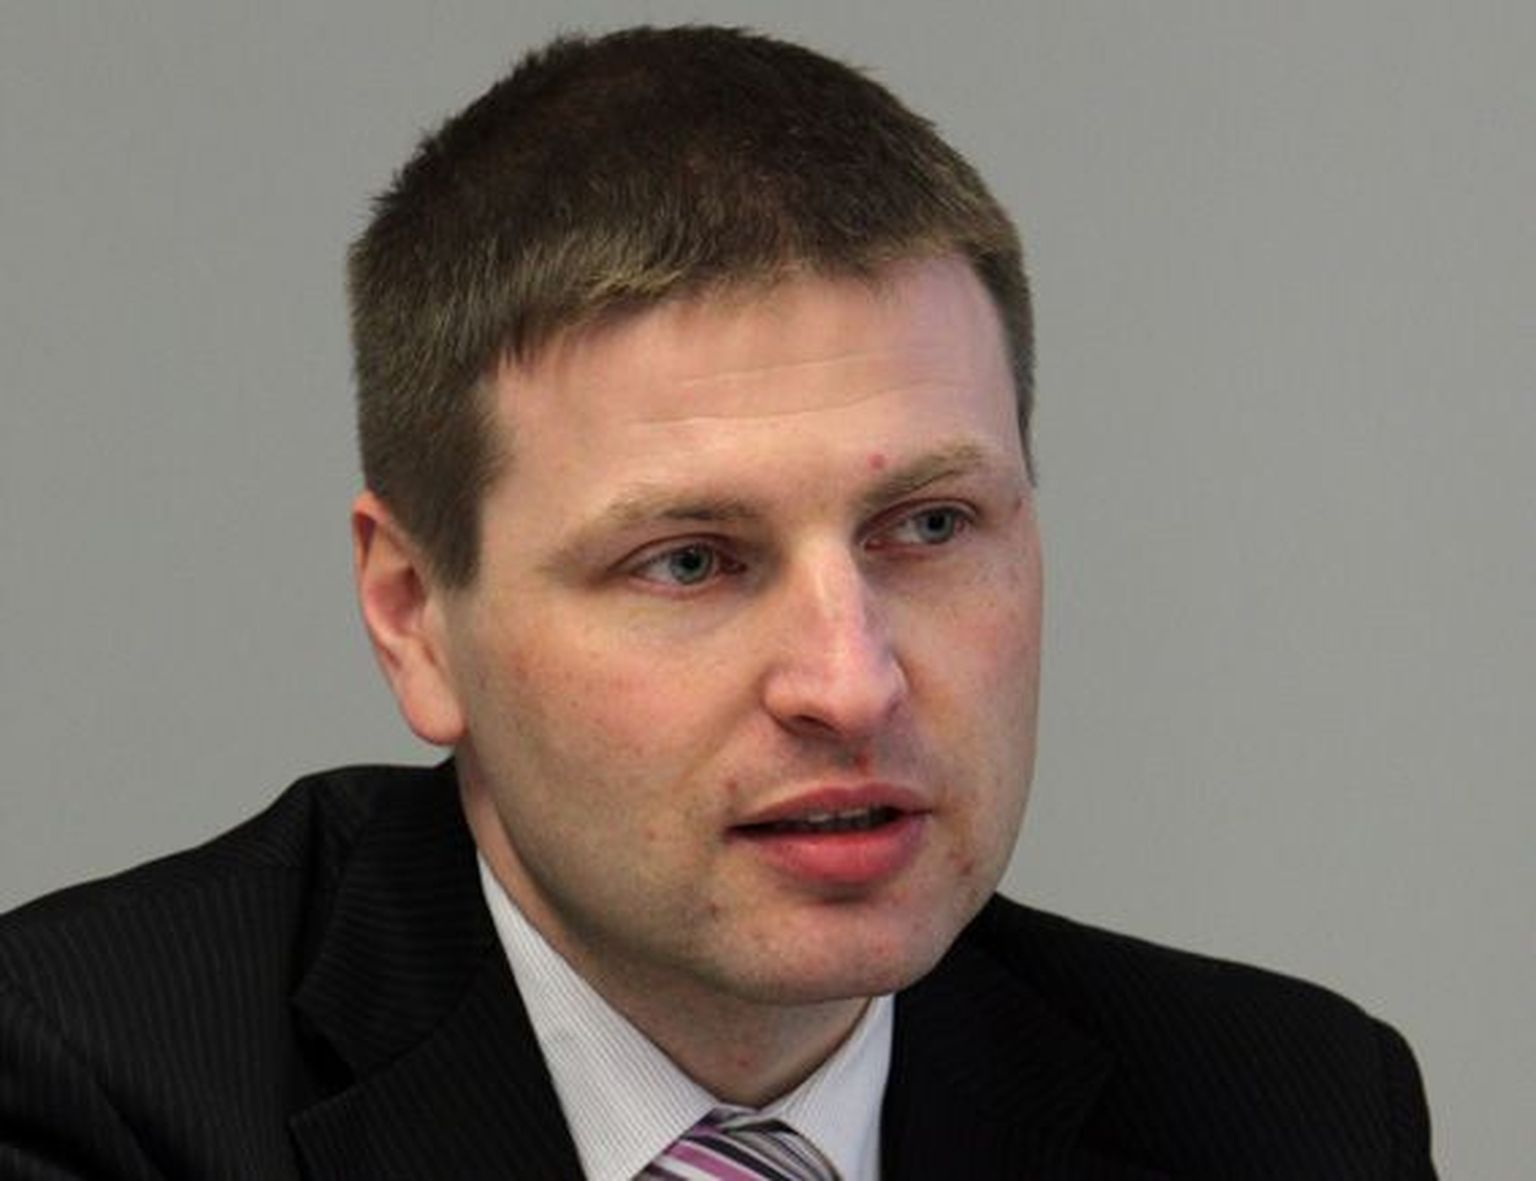 Justiitsminister Hanno Pevkur.